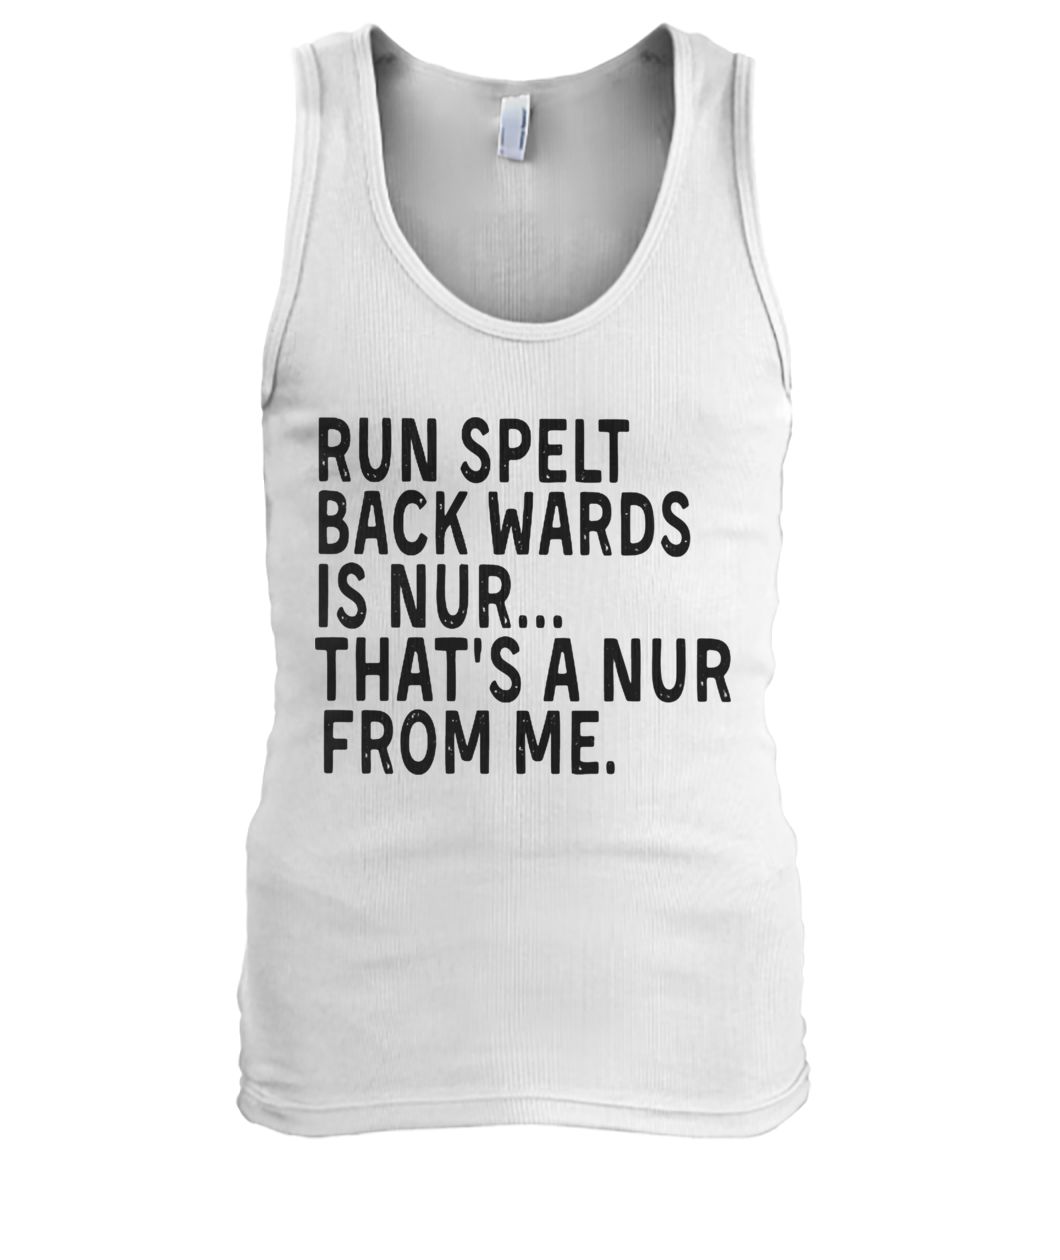 Run spelt backwards is nur that's a nur from me men's tank top